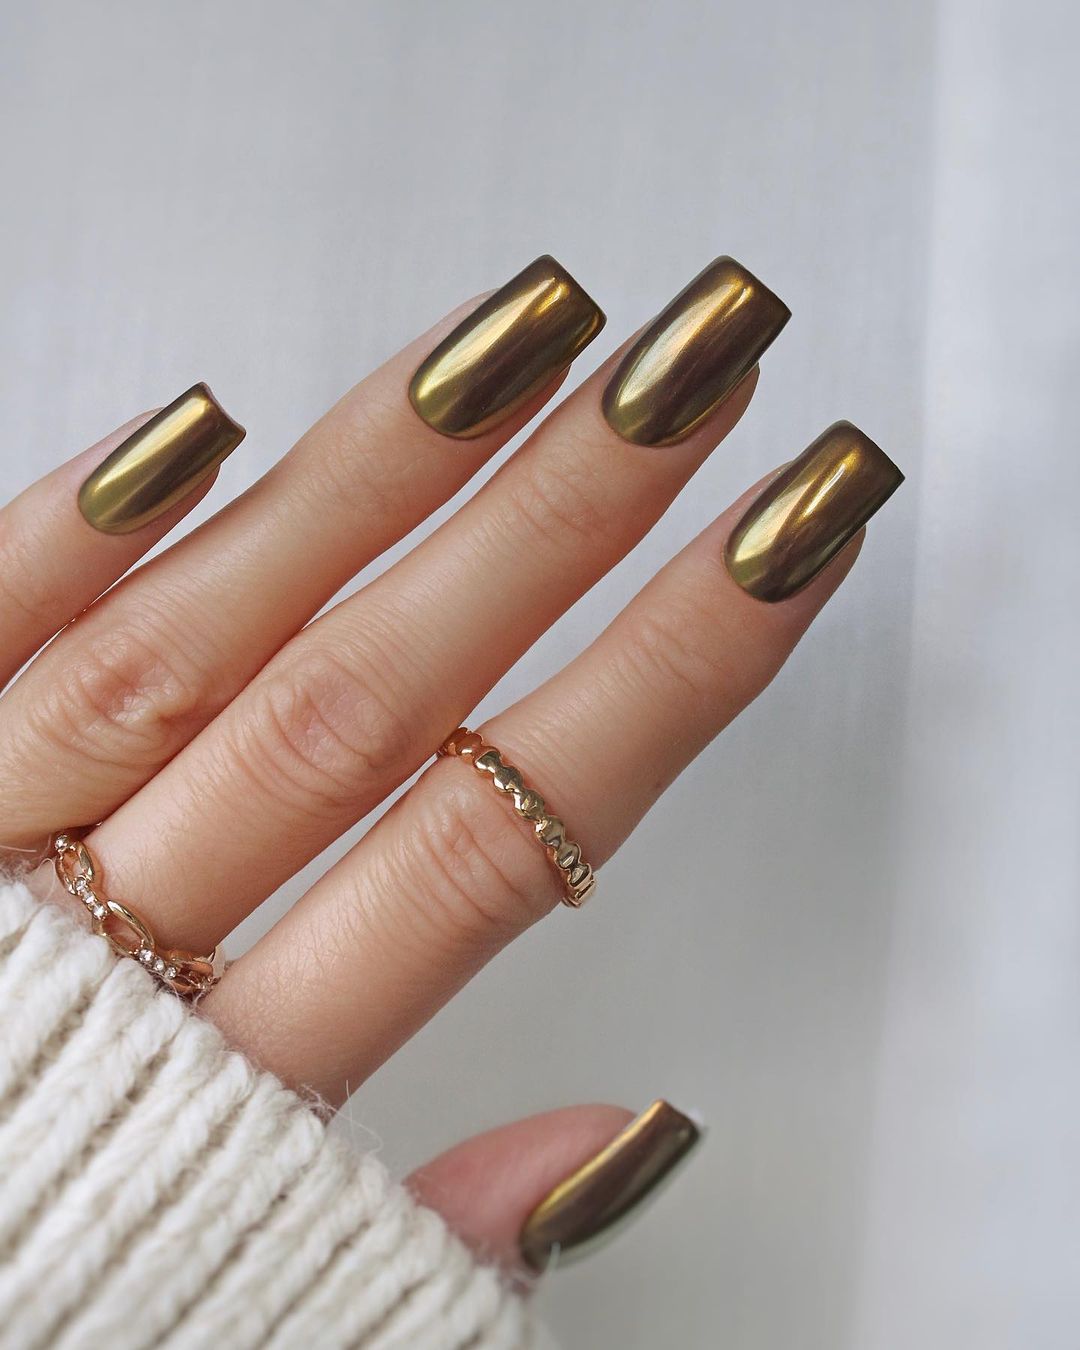 Long Square Gold Metallic Nails